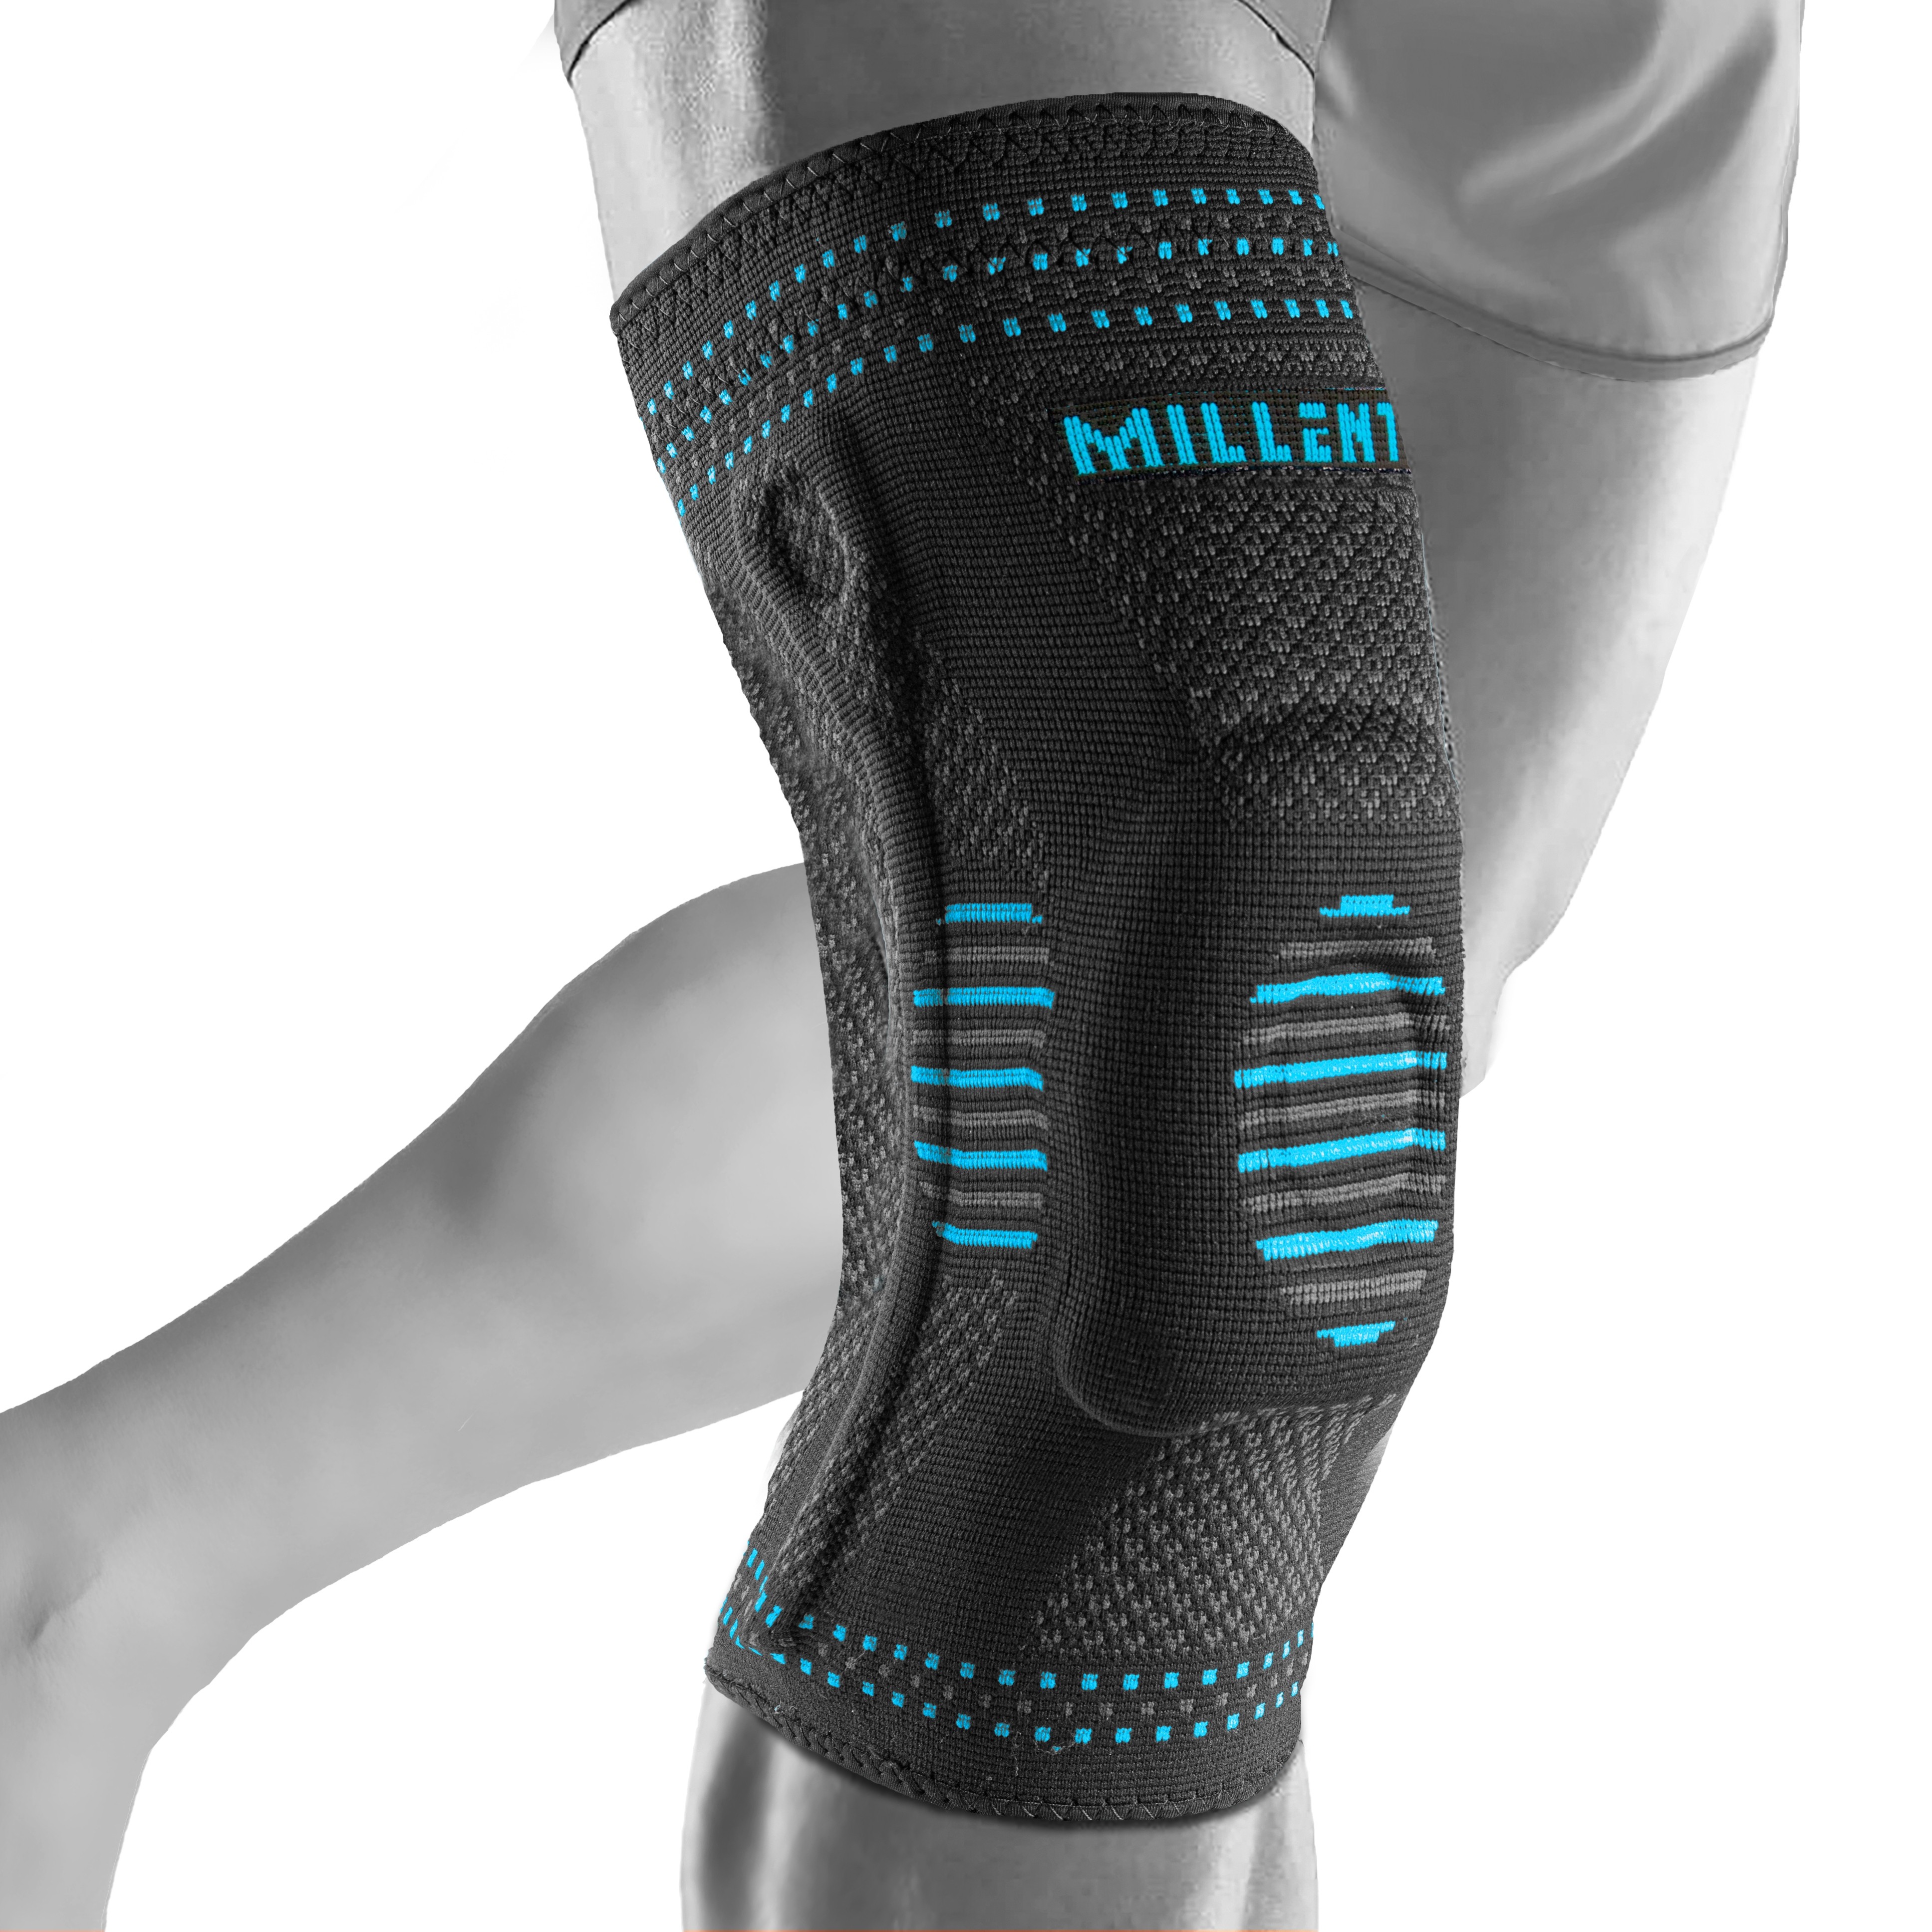 Millenti Knee Brace Compression Sleeve - Side Stabilizers